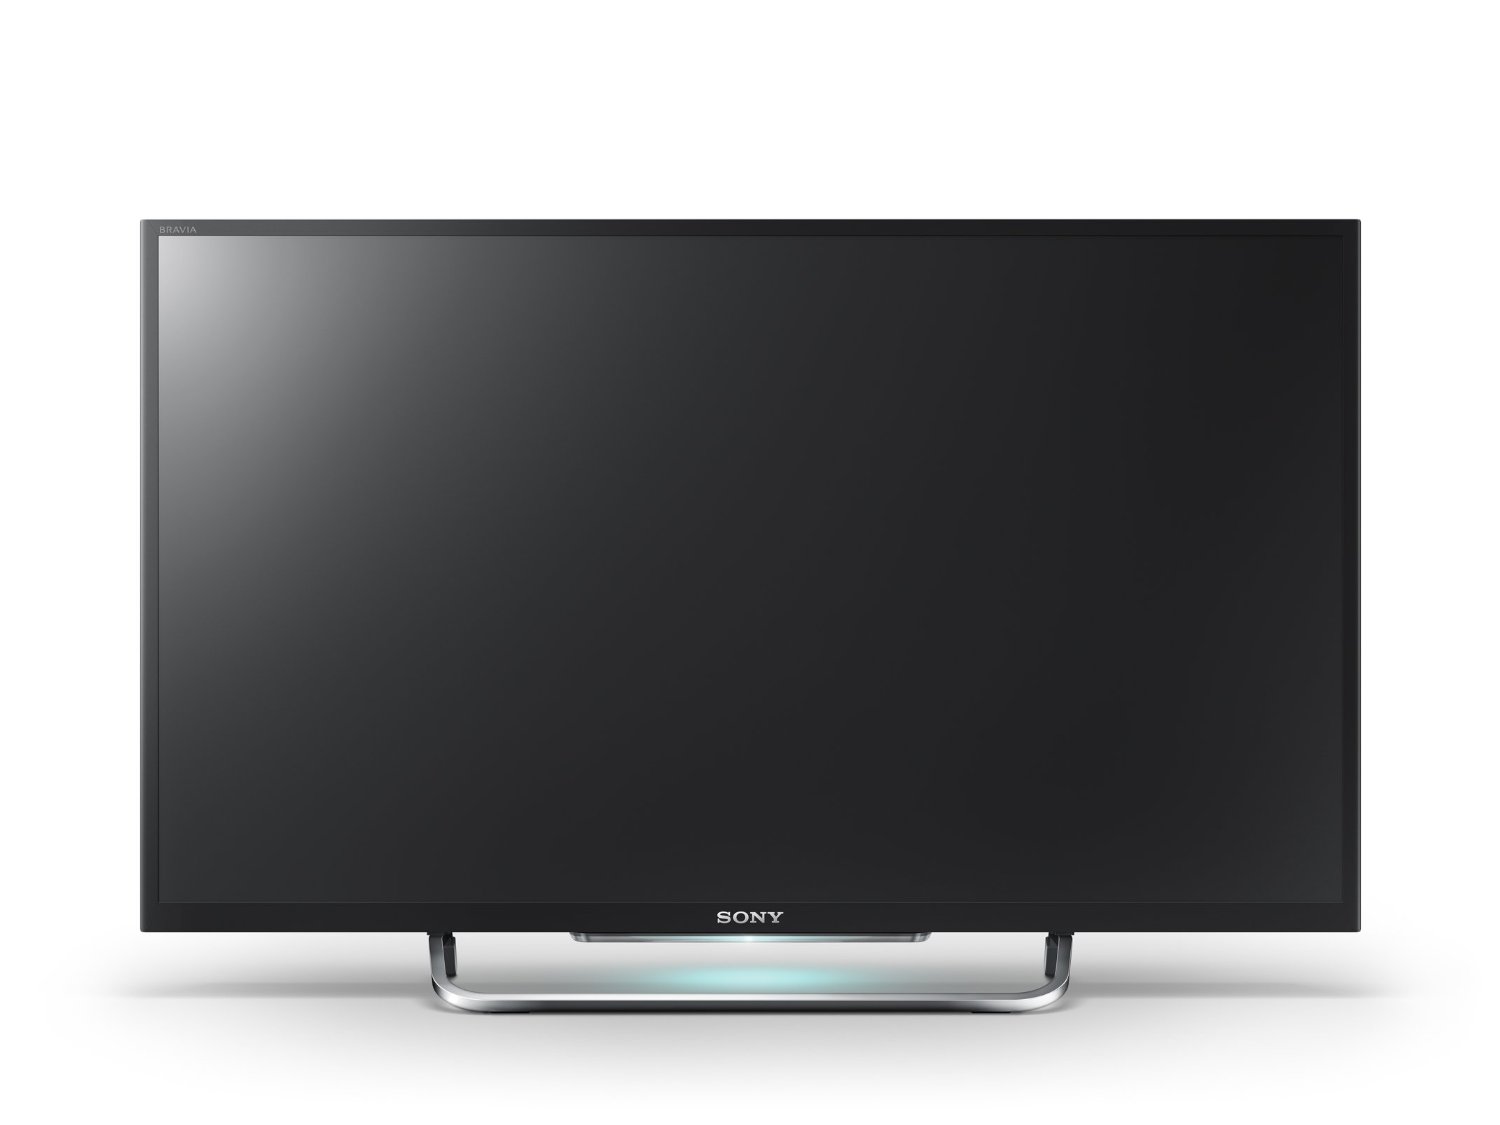 Sony KDL-50W800 KDL50W800 50" Class Full HD 3D TV HD 1080P LED LCD NTSC PAL SECAM TELEVISION